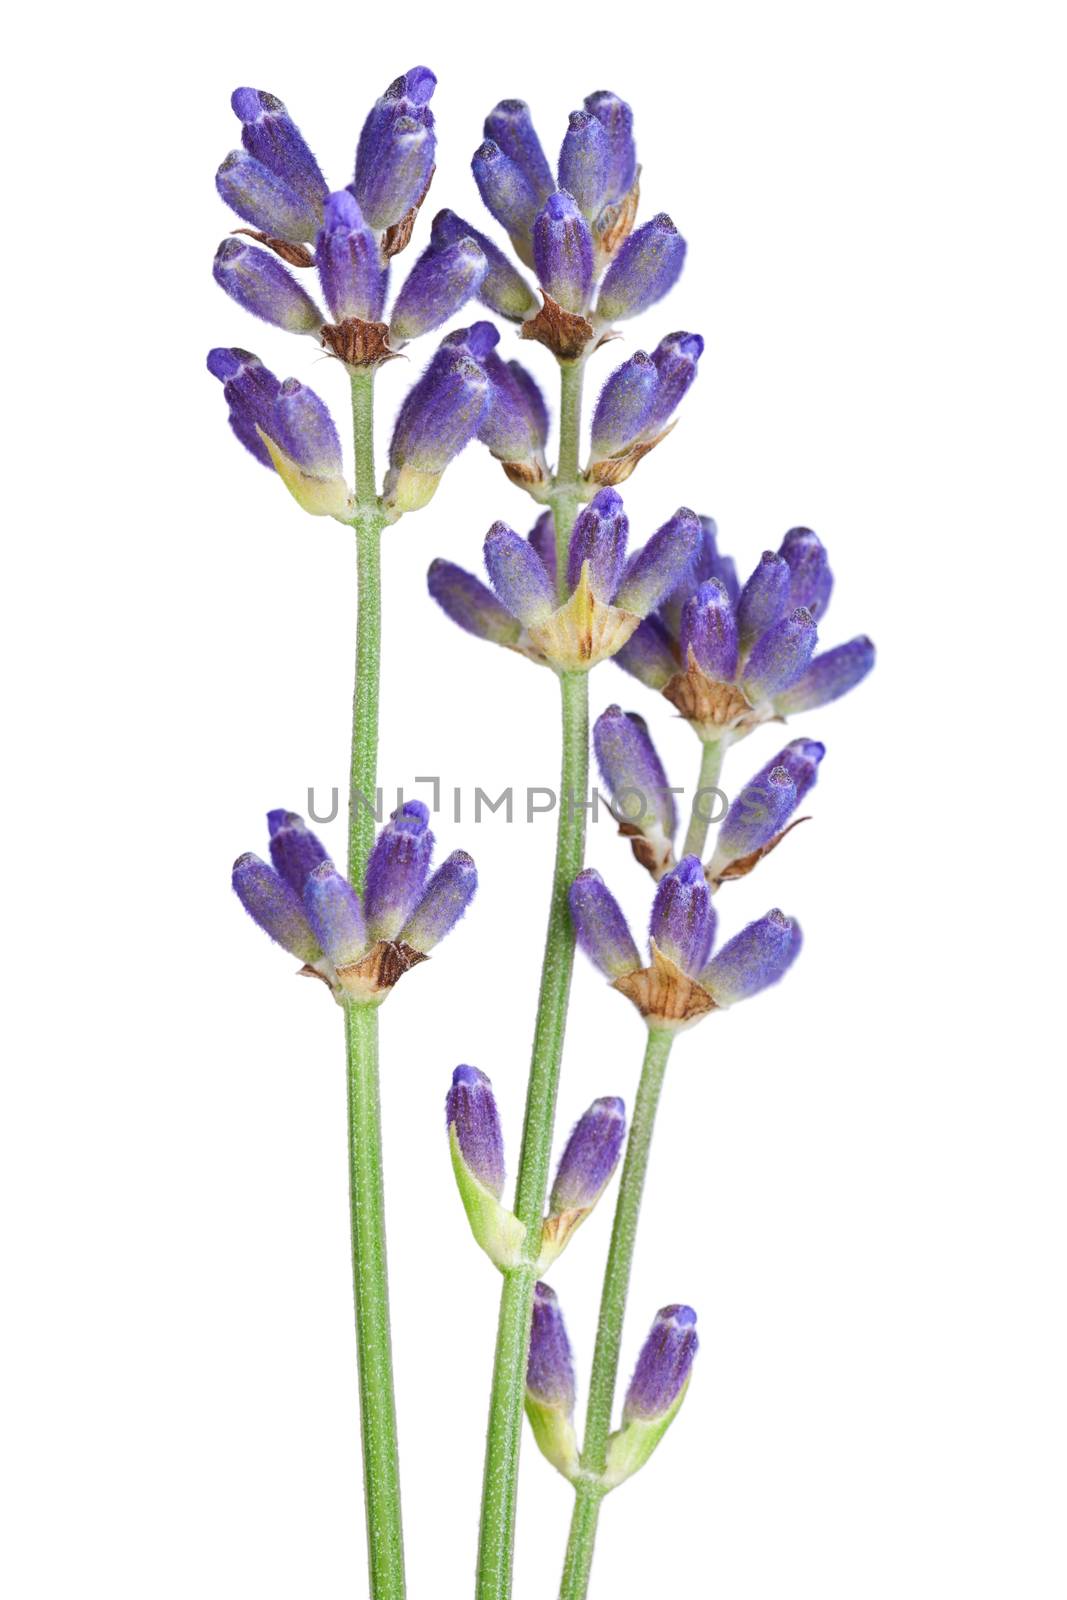 Lavender flowers isolated on white background. Macro shot